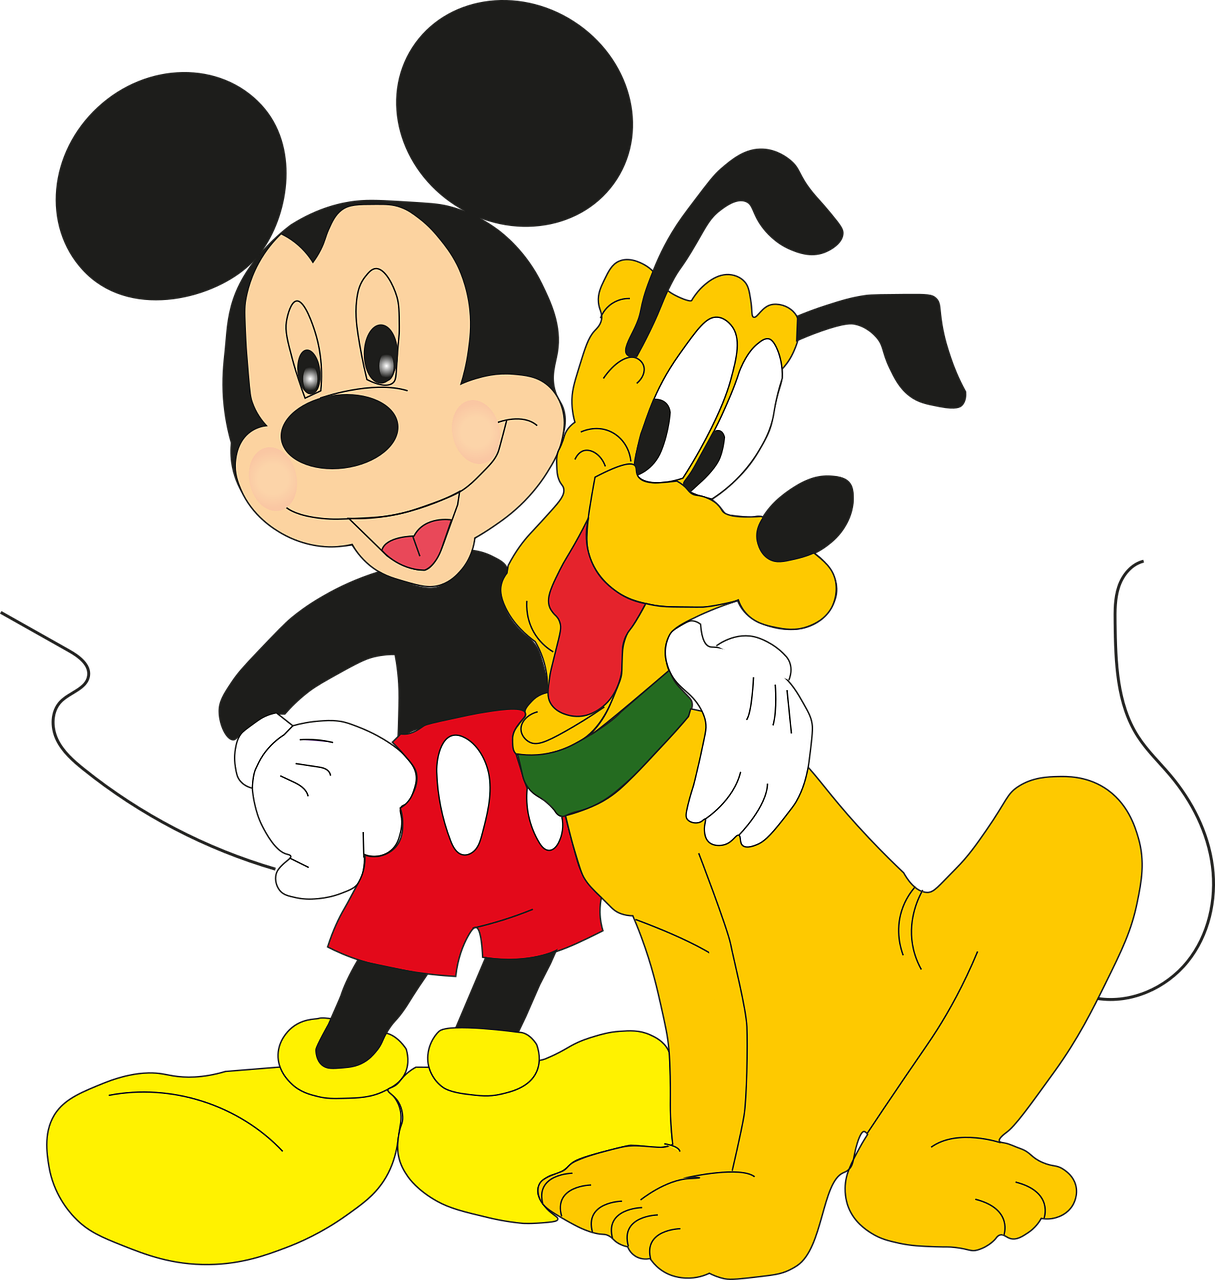 mickey mouse and pluto pluto pluto pluto pluto pluto pluto pluto pluto pluto pluto pluto pluto pluto pluto, shutterstock, cobra, black background!!!!!, hugging, masterpiece”, he is a long boi ”